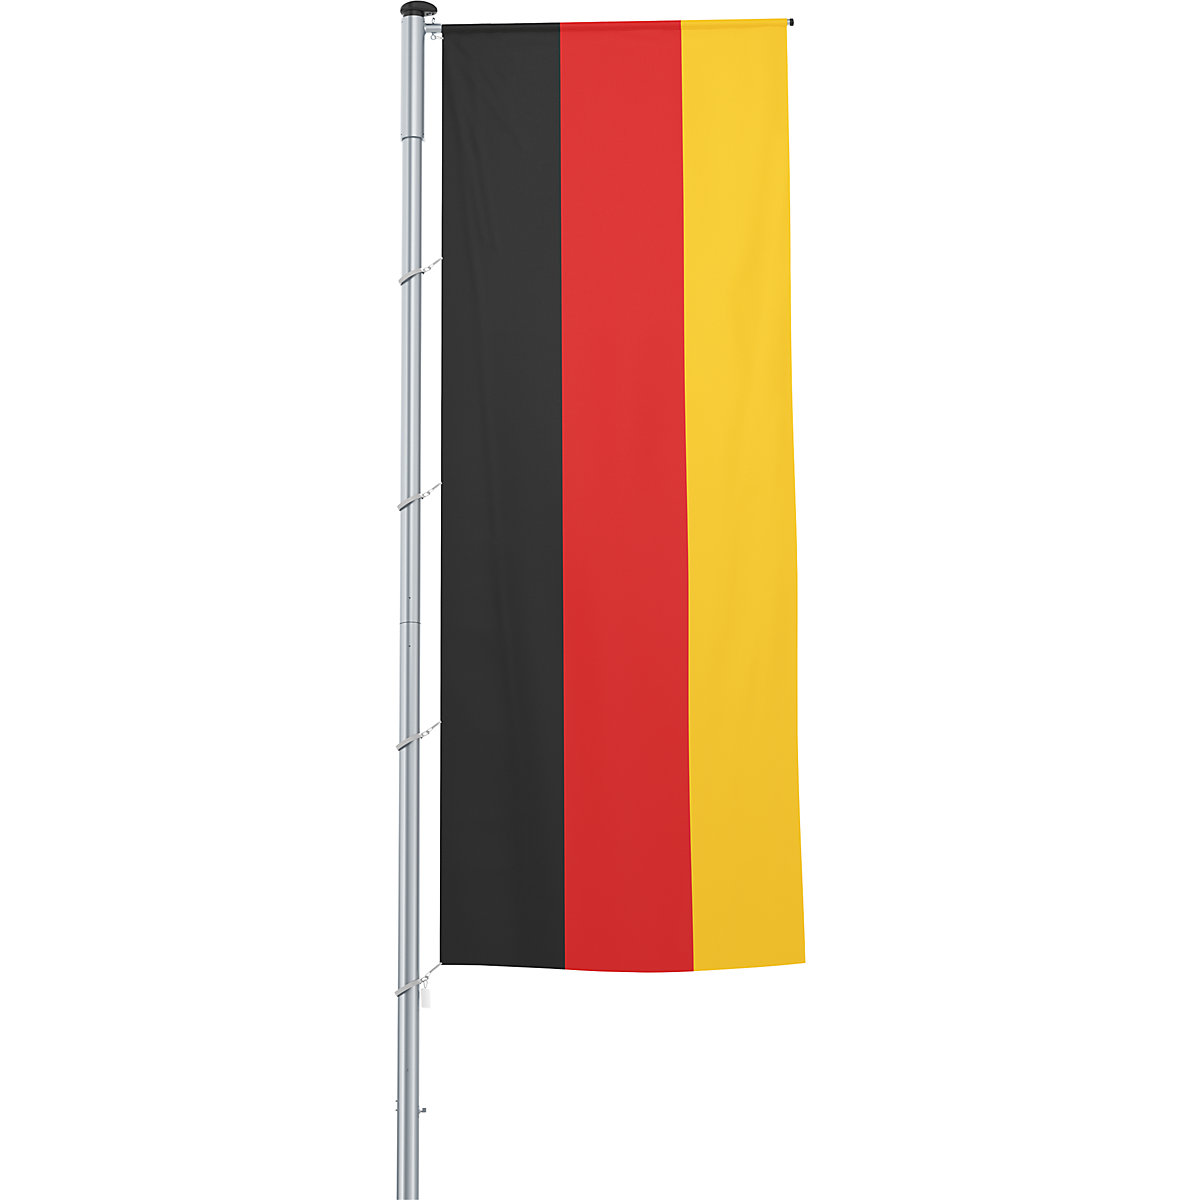 Steag pentru braț/drapel național – Mannus, format 1,2 x 3 m, Germania-26